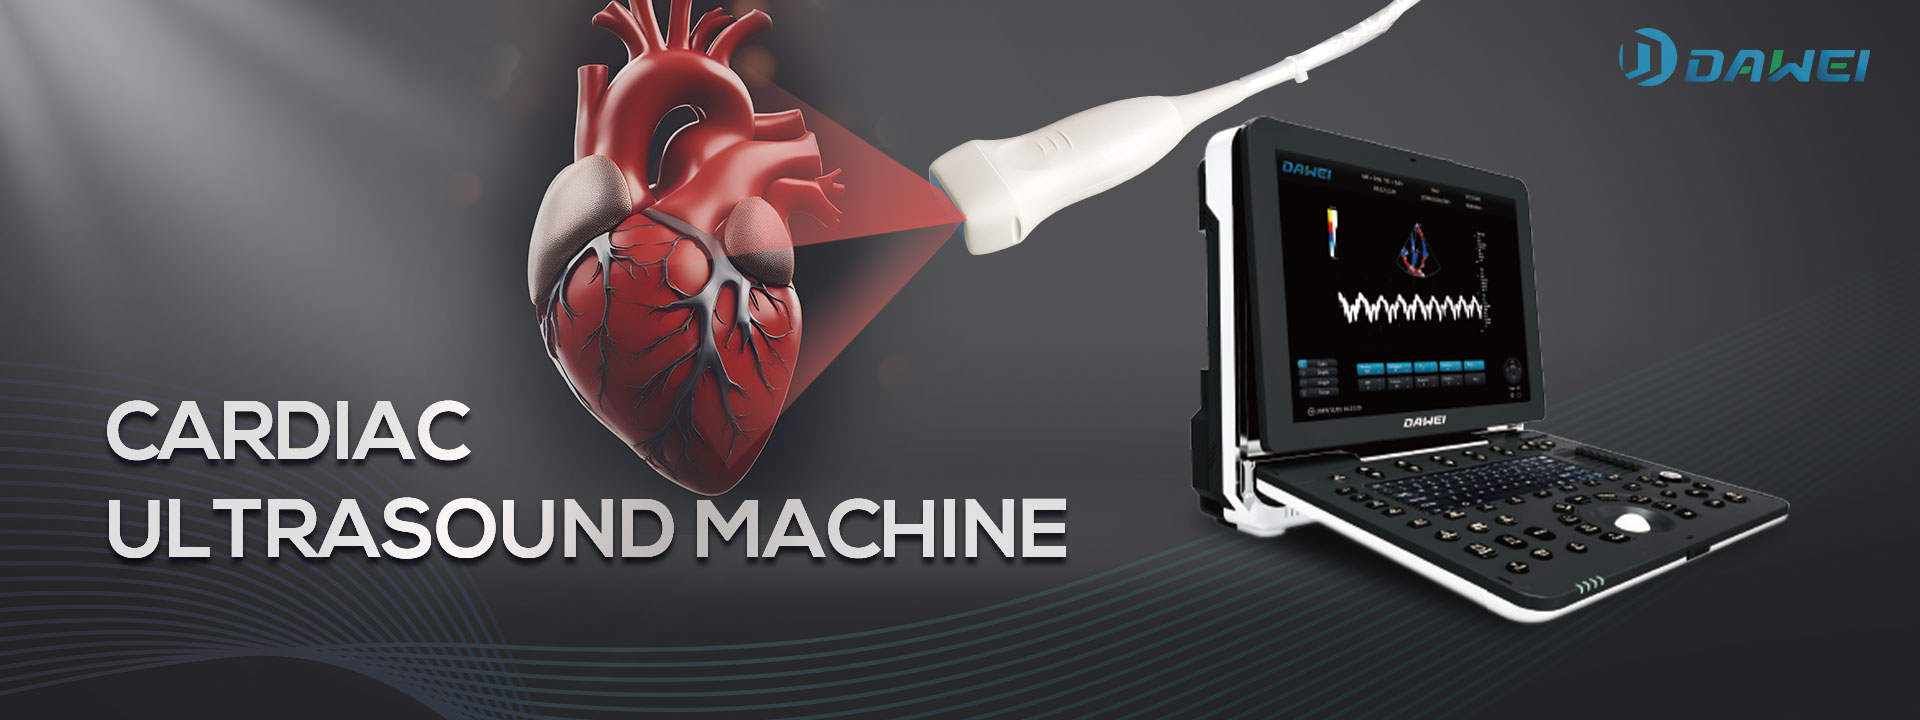 https://www.ultrasounddawei.com/news/exploring-cardiac-ultrasound-machine/